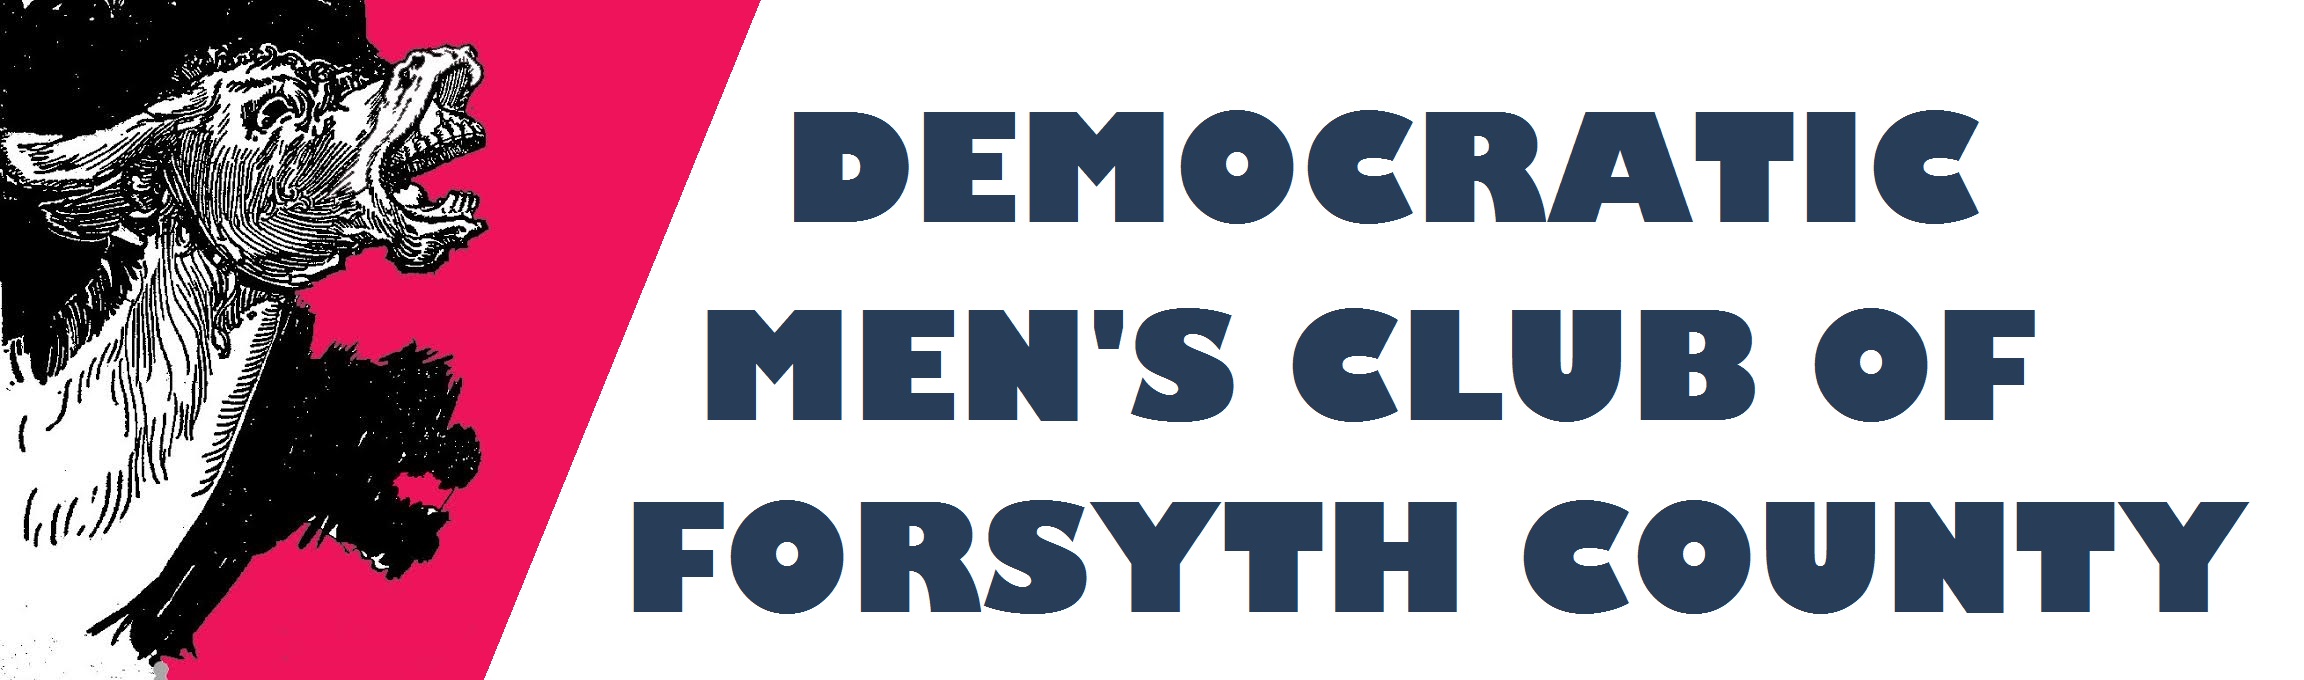 Democratic Men's Club of Forsyth County logo